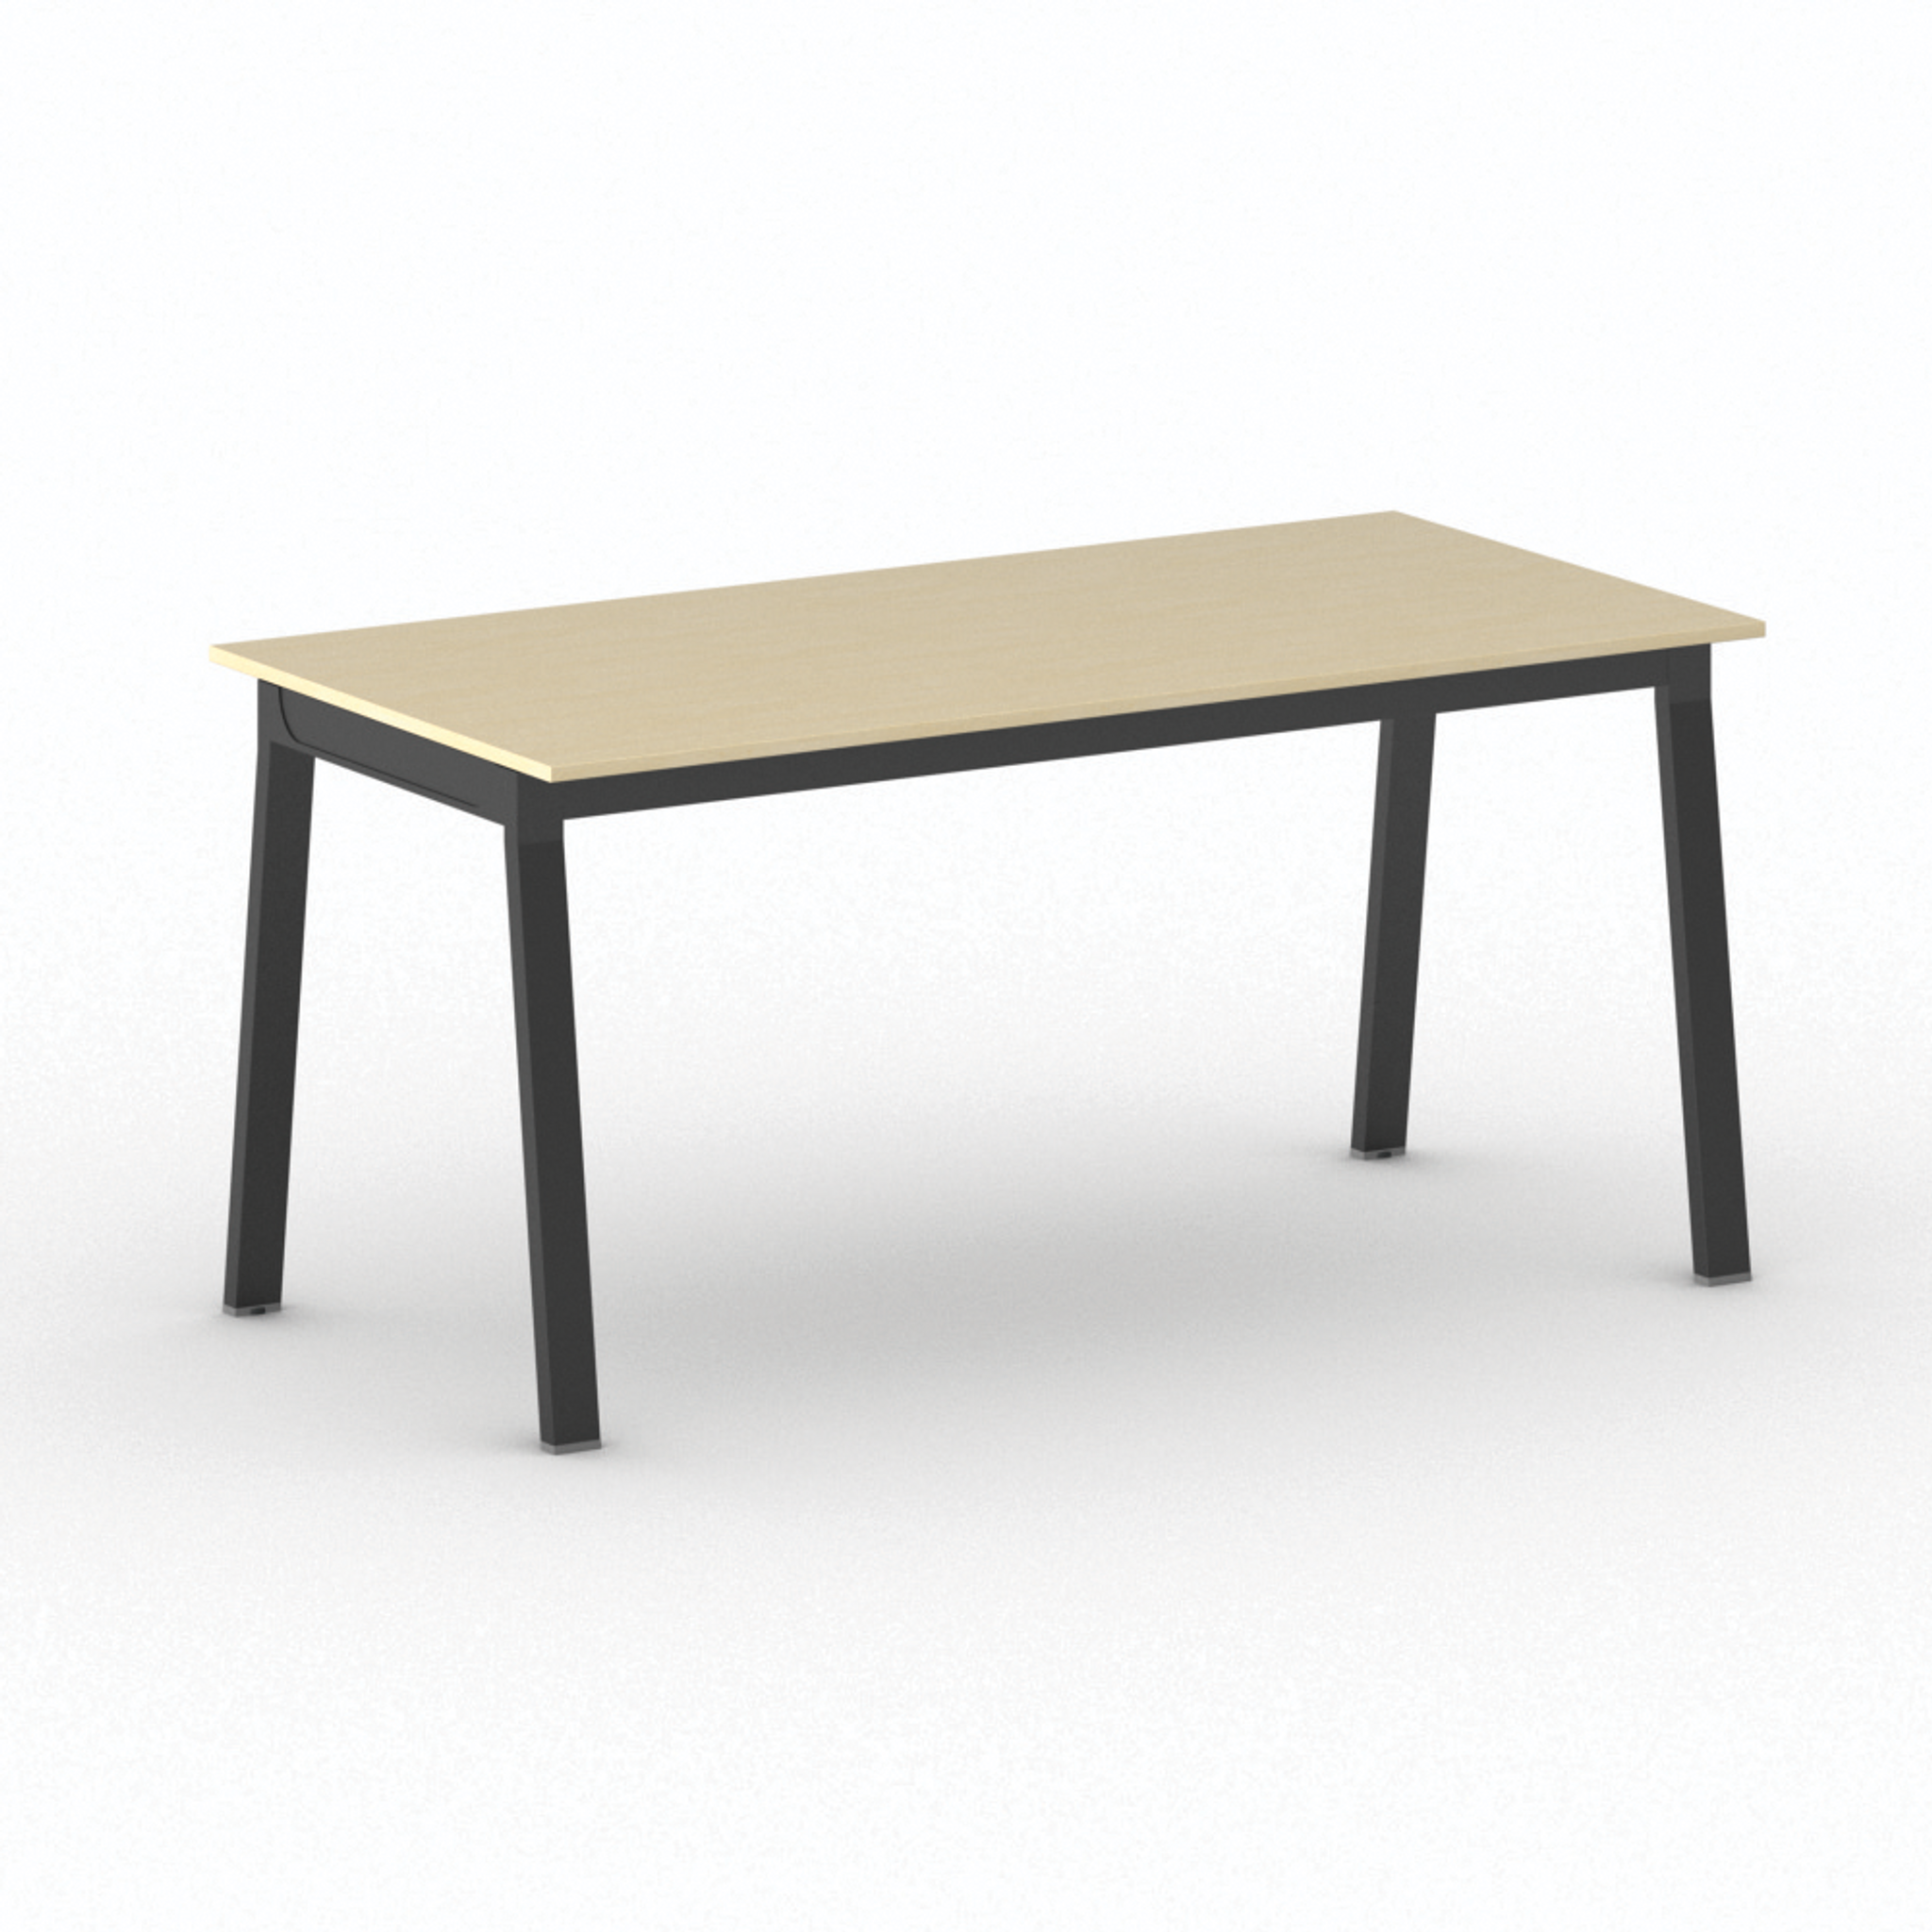 Stół PRIMO BASIC 1600 x 800 x 750 mm